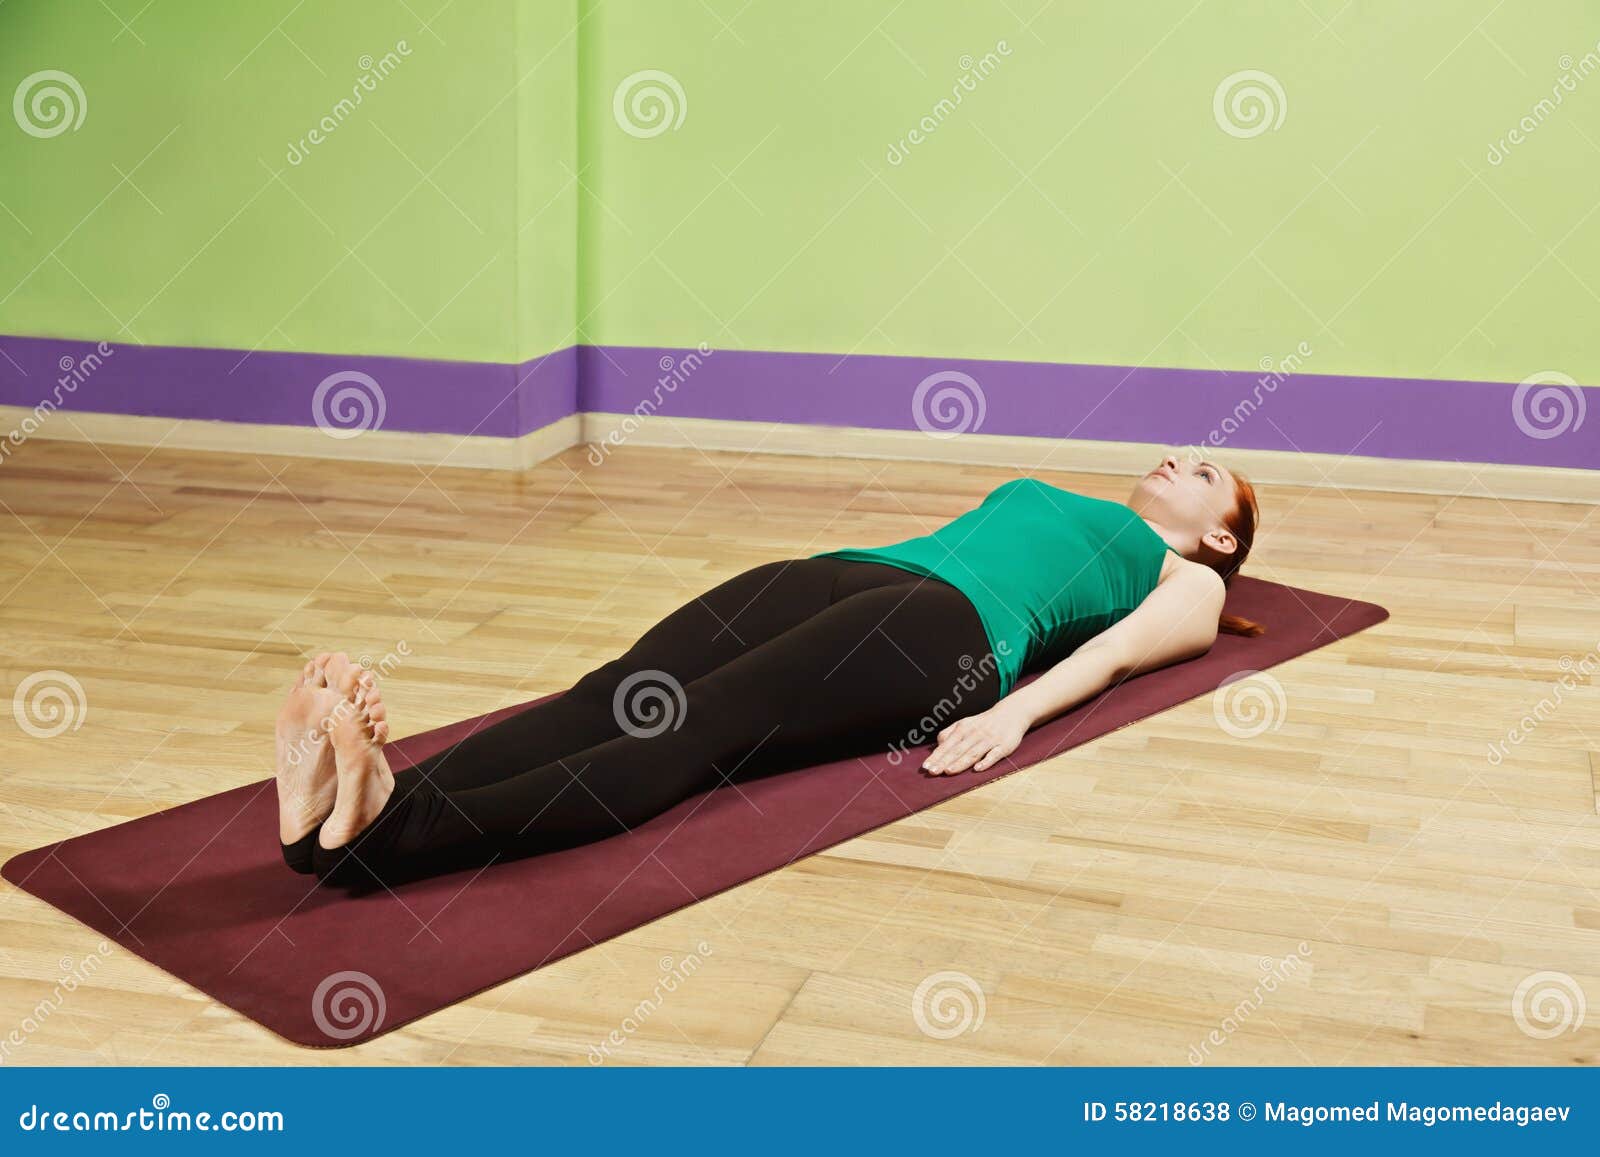 https://thumbs.dreamstime.com/z/laying-down-mat-pose-woman-exercising-second-tibetian-yoga-set-58218638.jpg